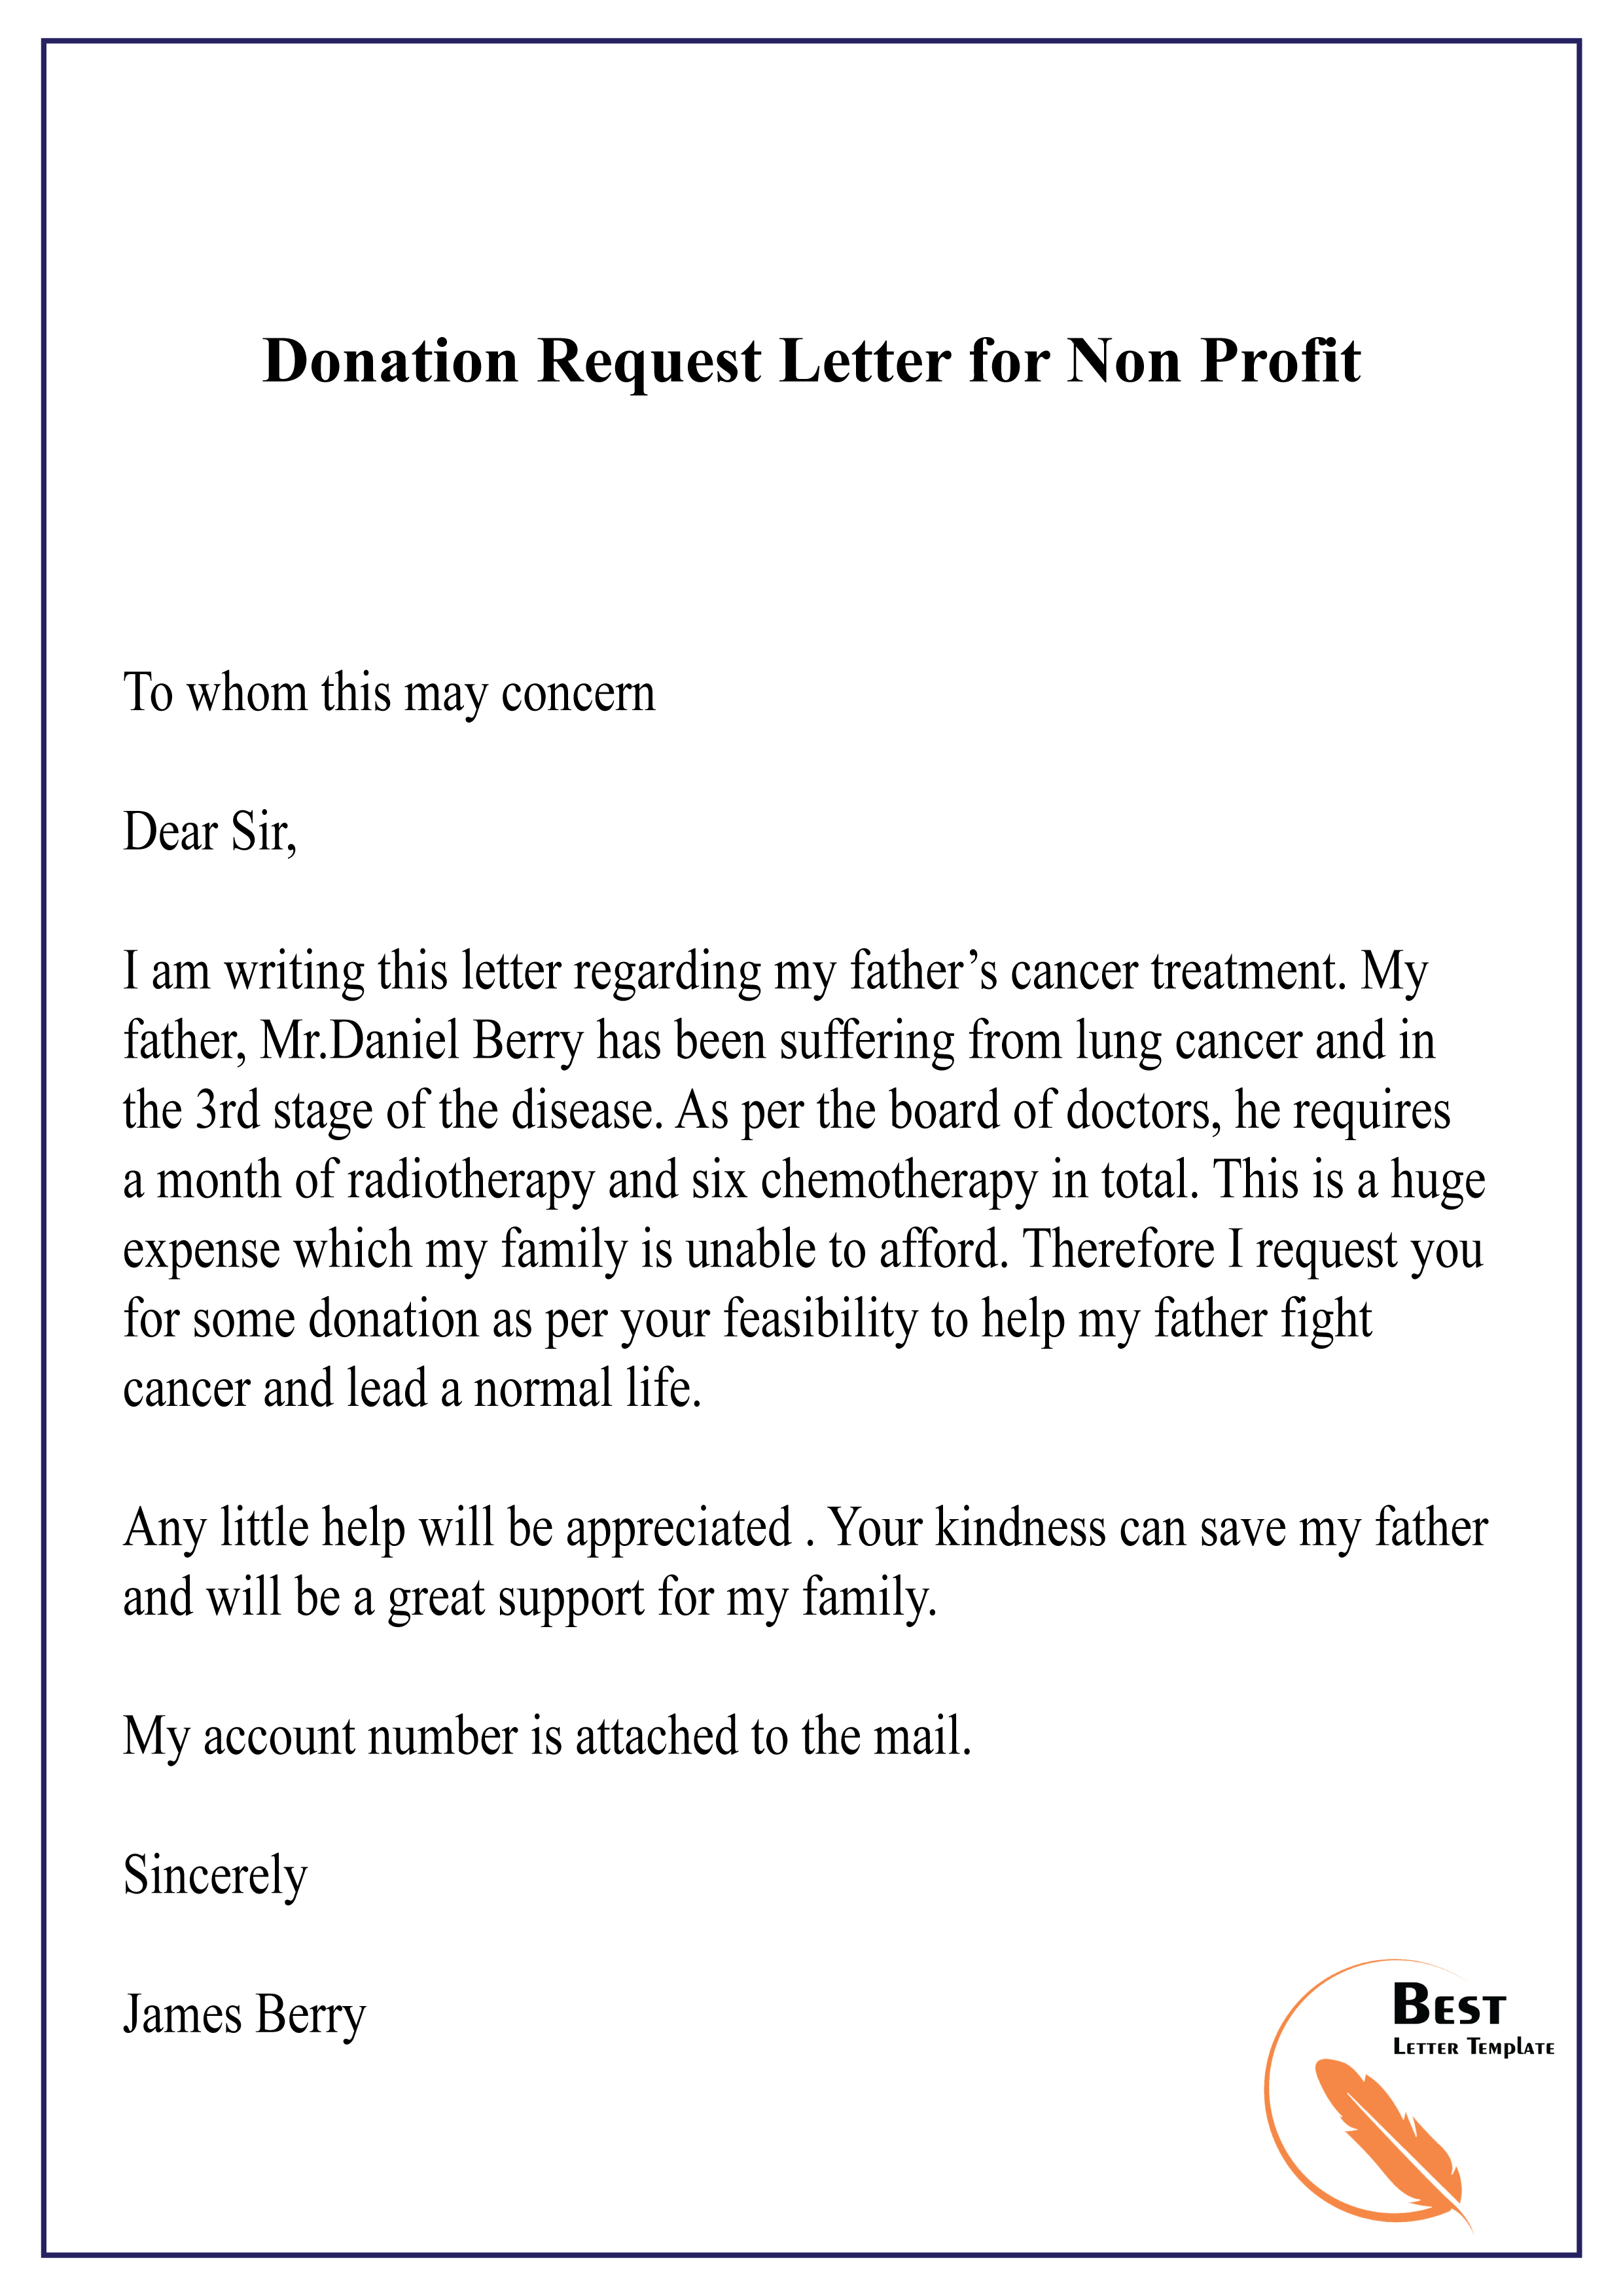 Donation Solicitation Letter Samples from bestlettertemplate.com